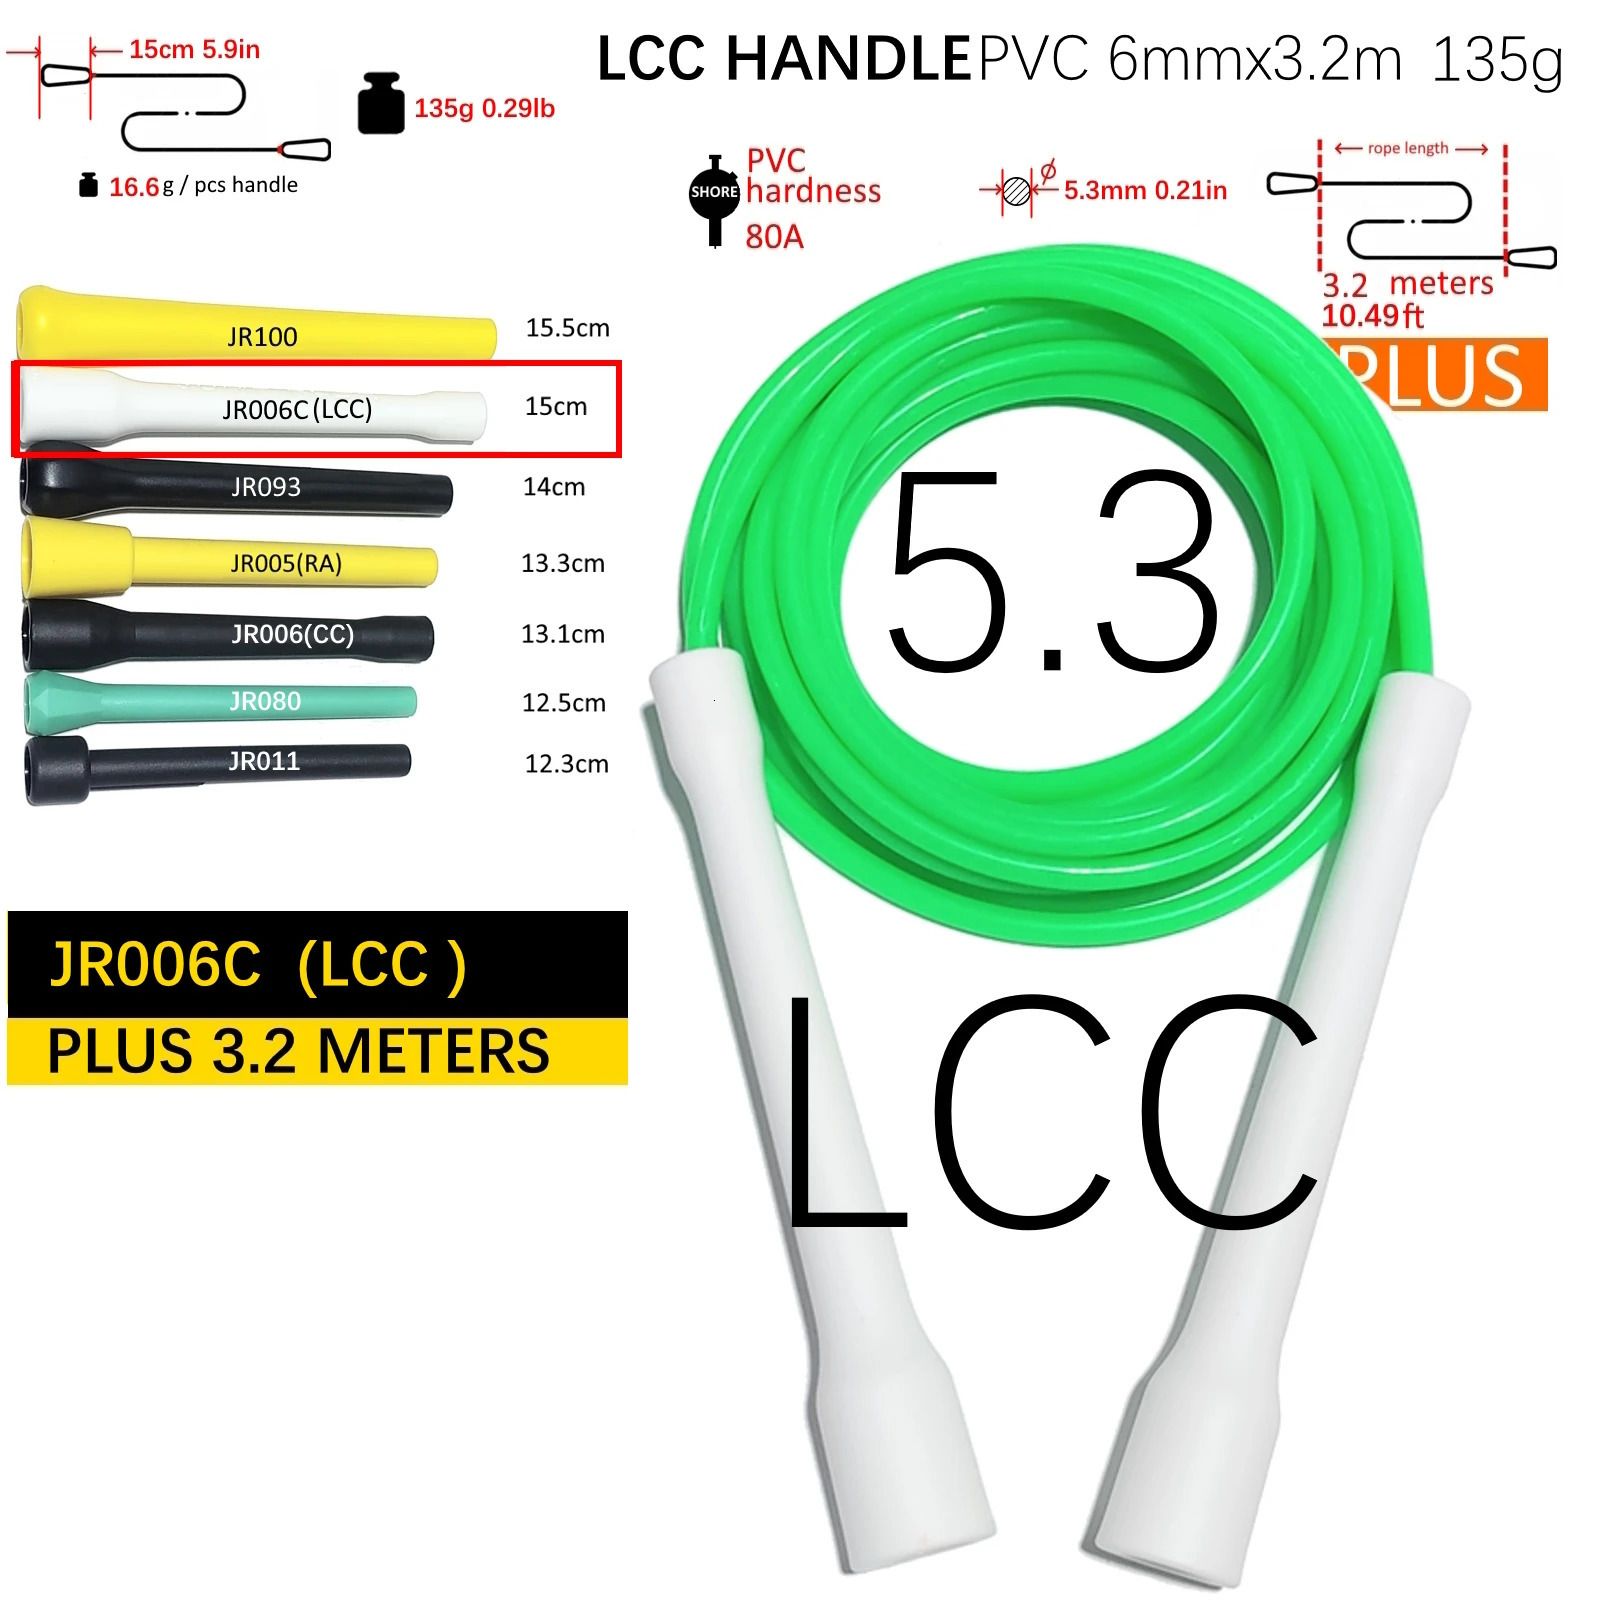 Lcc Pvc 5.3mmx3.2m